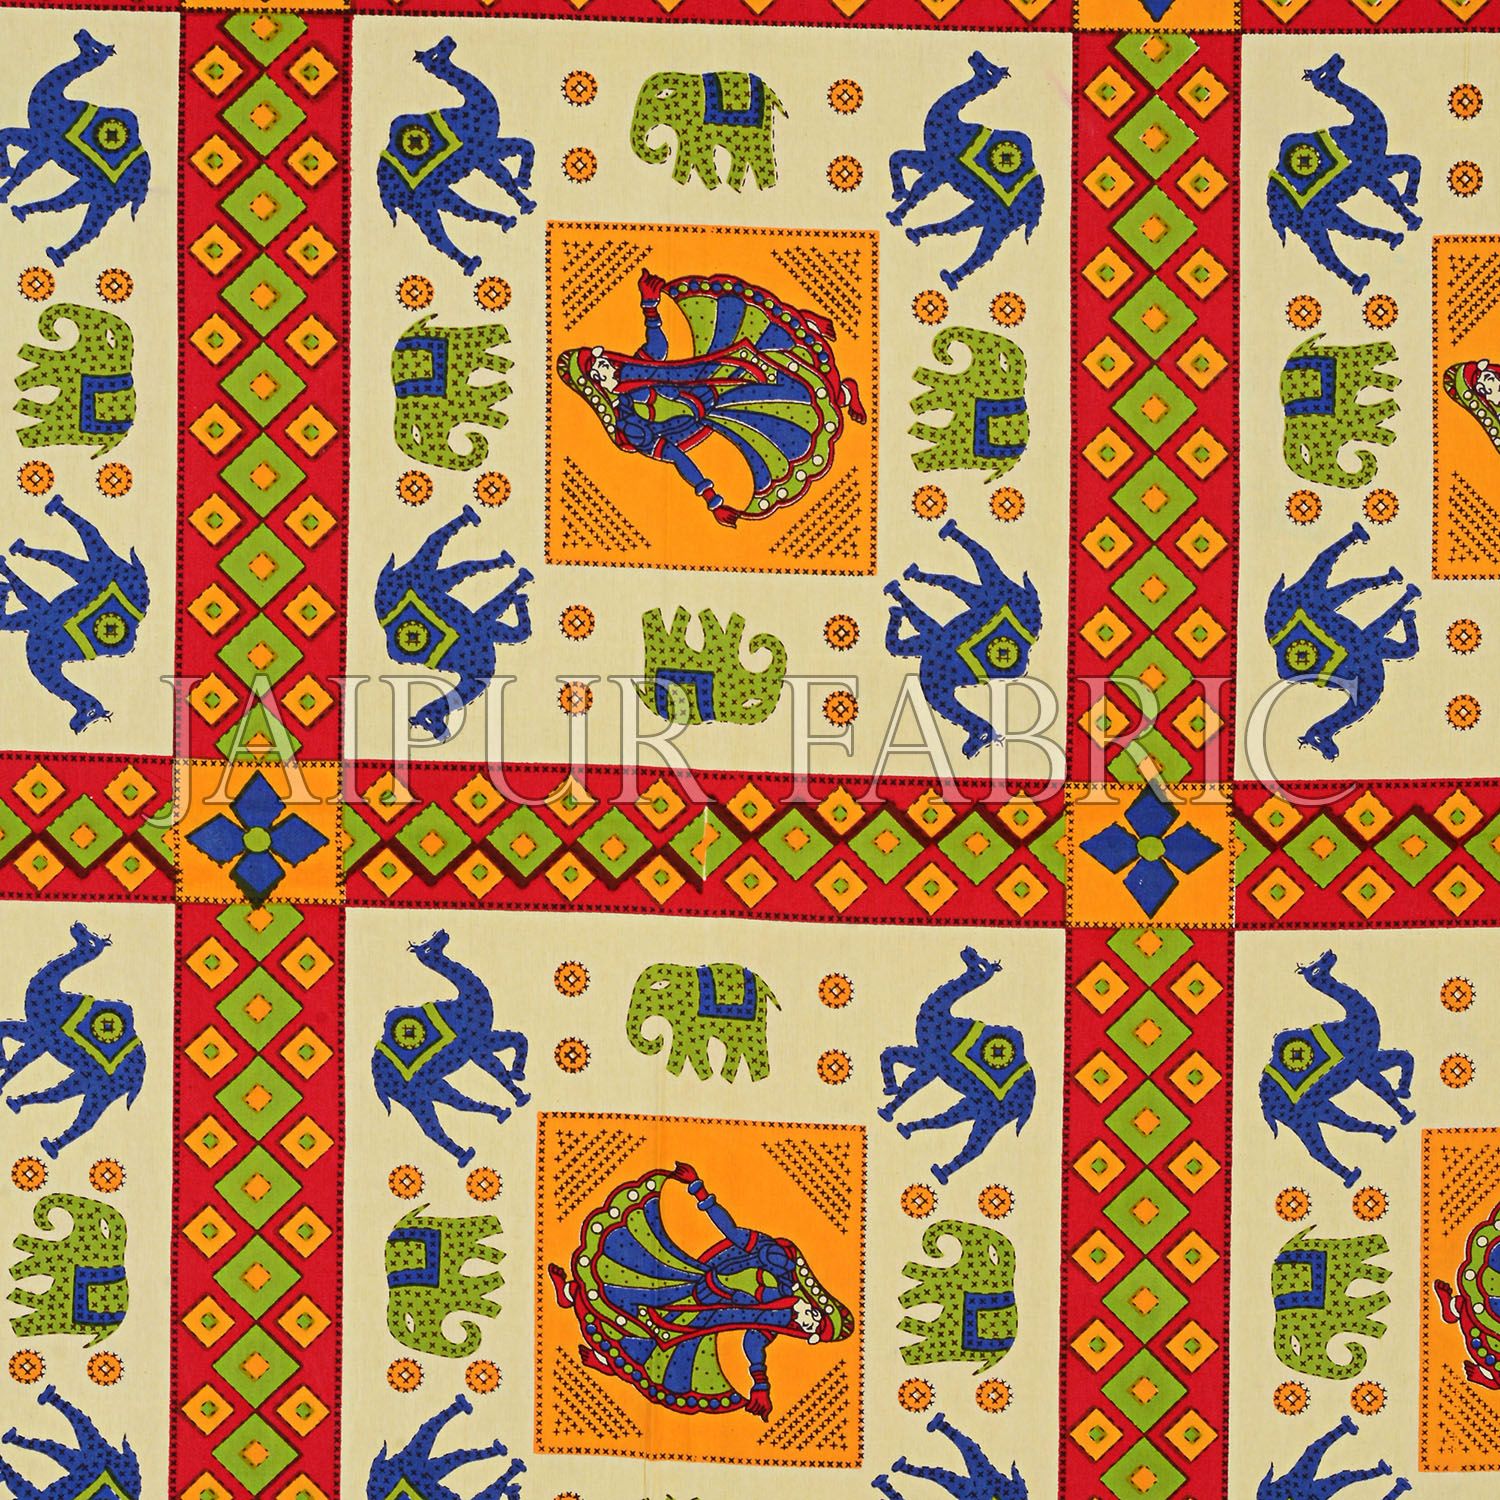 Yellow Border Elephant and Camel Rajasthani Folk Dance Cotton Double Bed Sheet